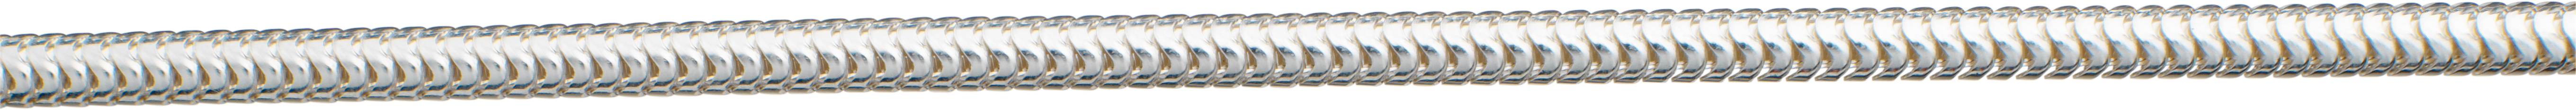 Snake chain silver 925/- Ø 3,20mm